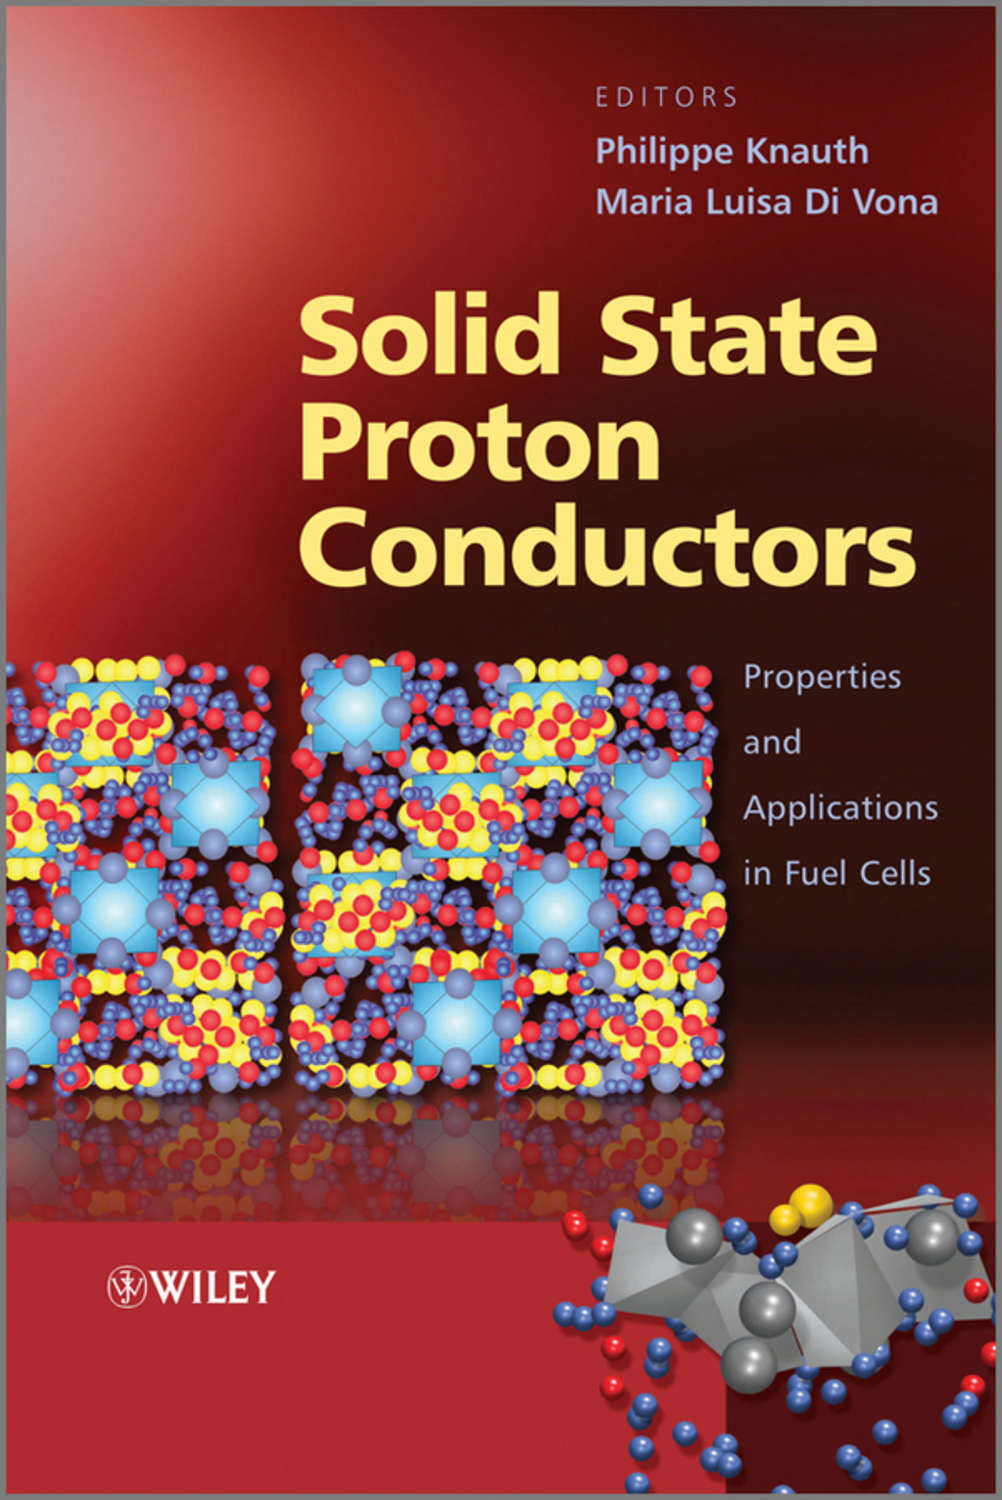 Solid книги. Proton conductor. Solid books. Solid State Proton conductors. Книга твердое тело